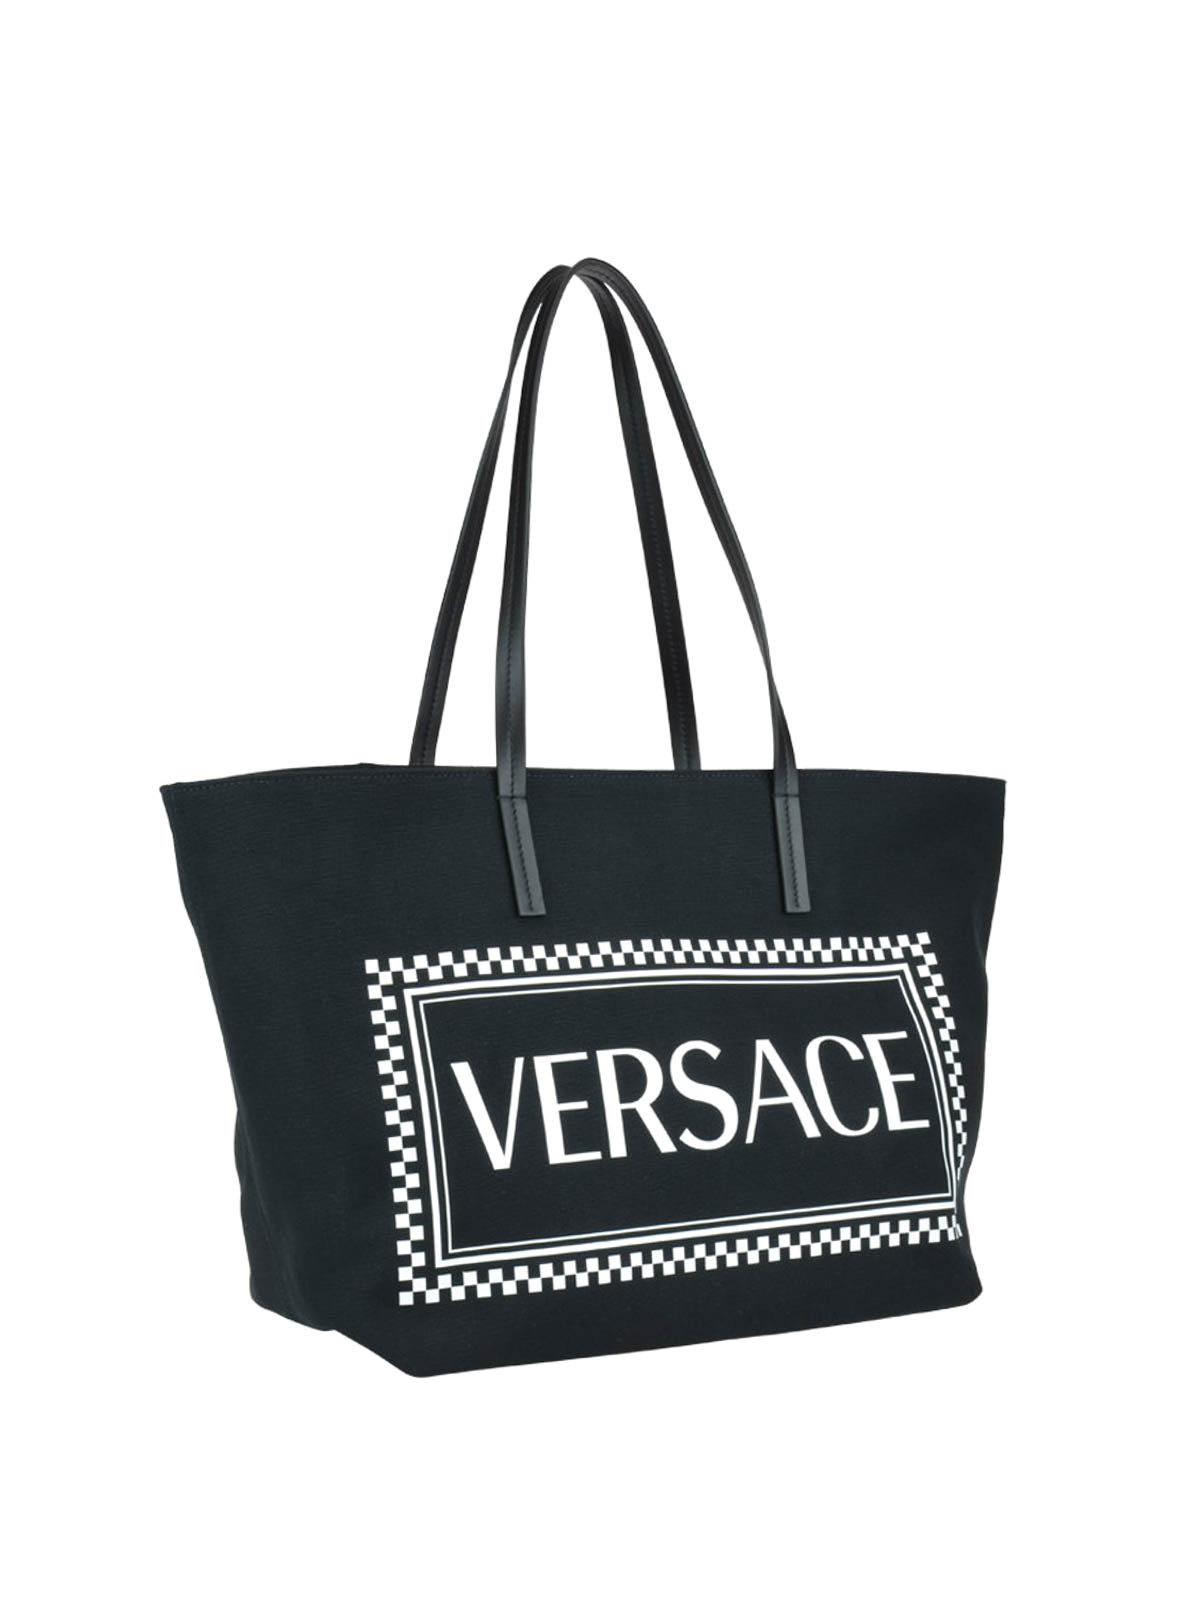 versace black tote bag